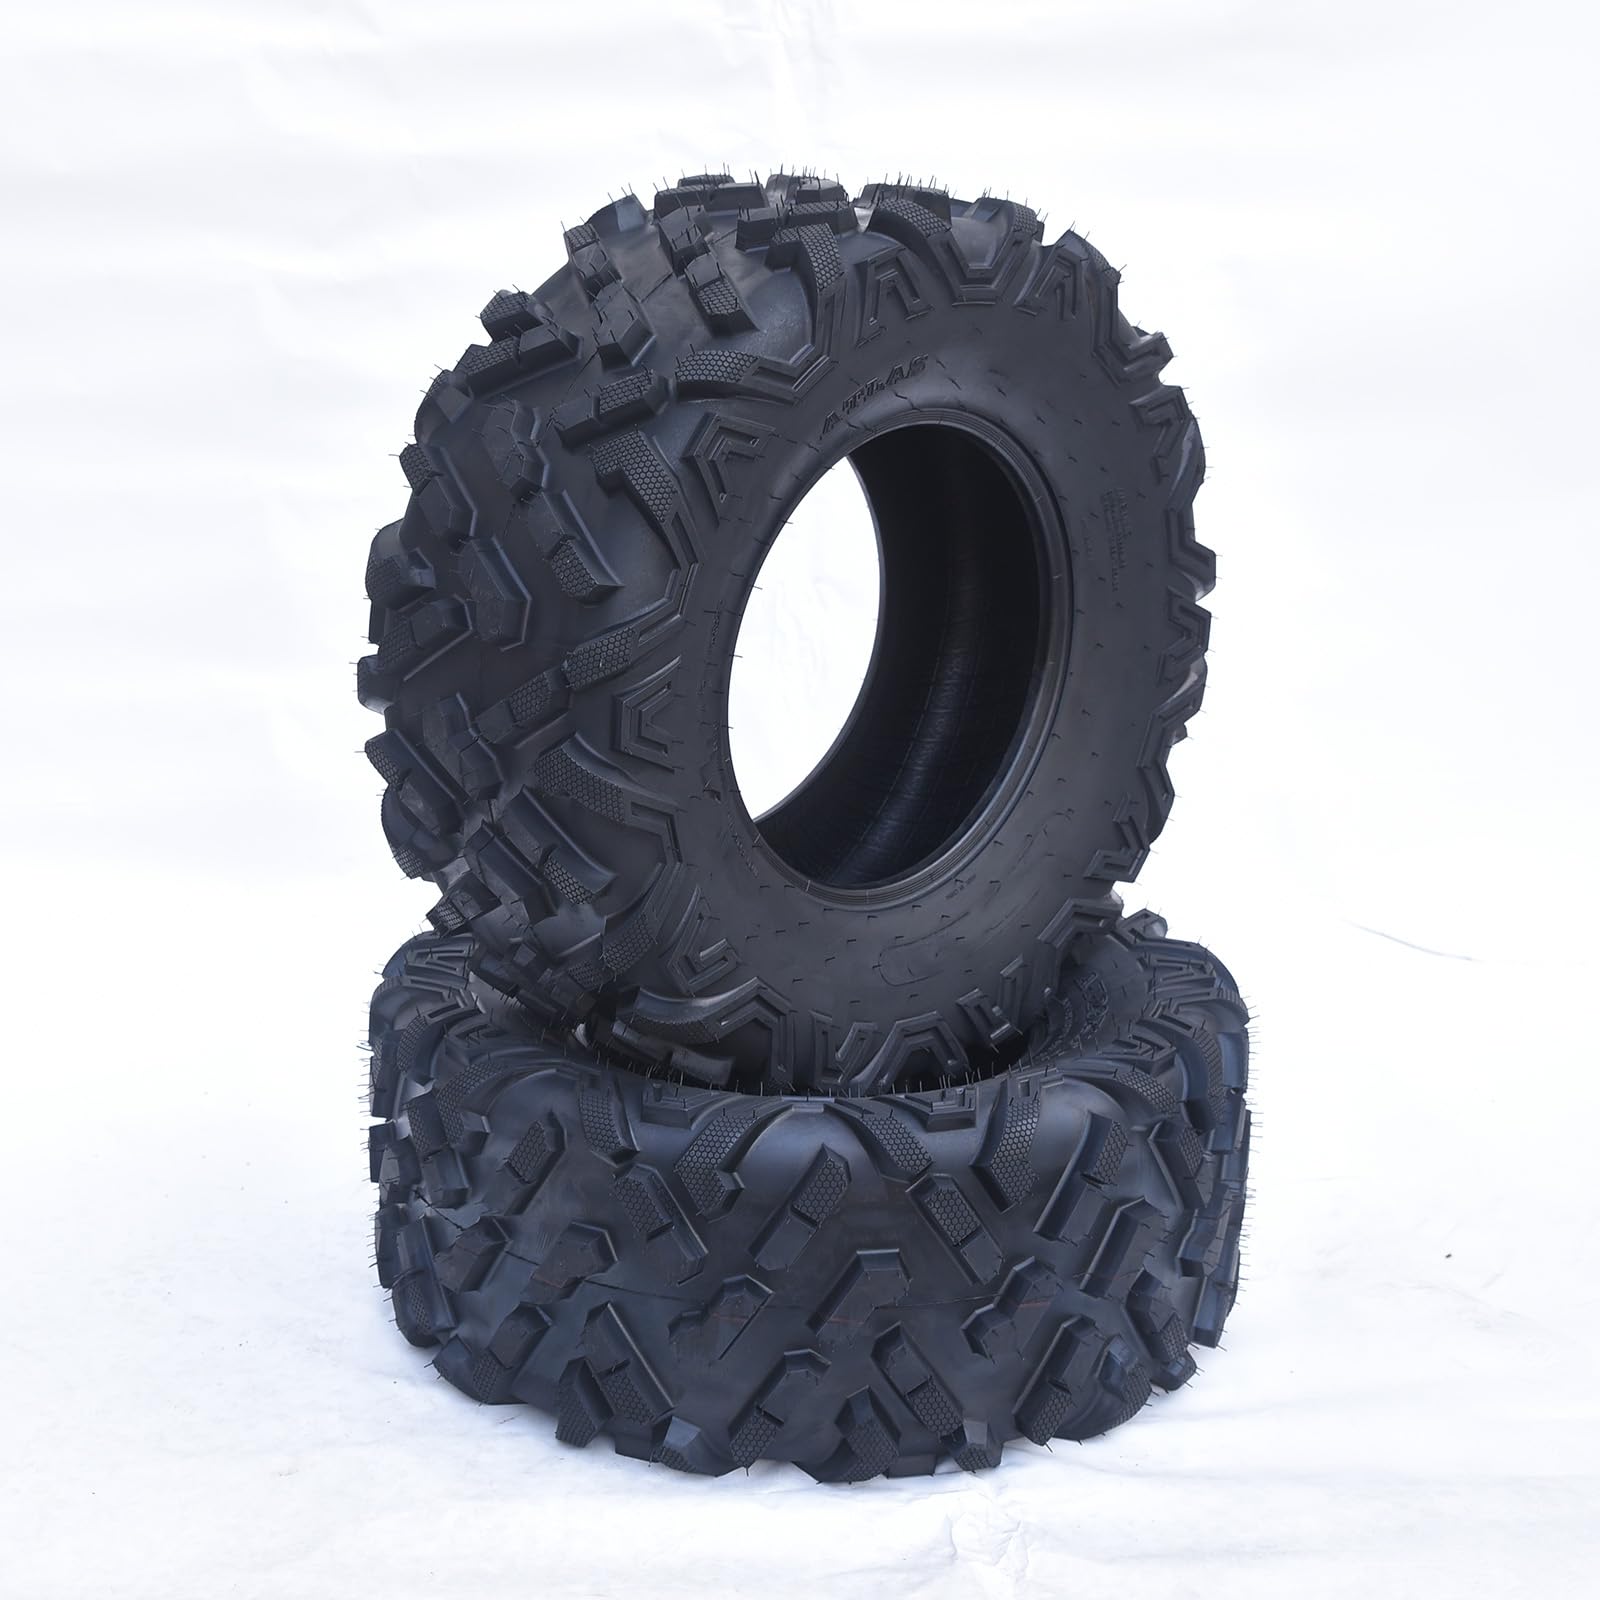 27x9-14 ATV Tires UTV Trail Sand Off-Road Tires 27x9-14, All Terrain Tires 20mm Tread Depth 27x9x14 UTV Tires, 6 PR, Tubeless Set of 2